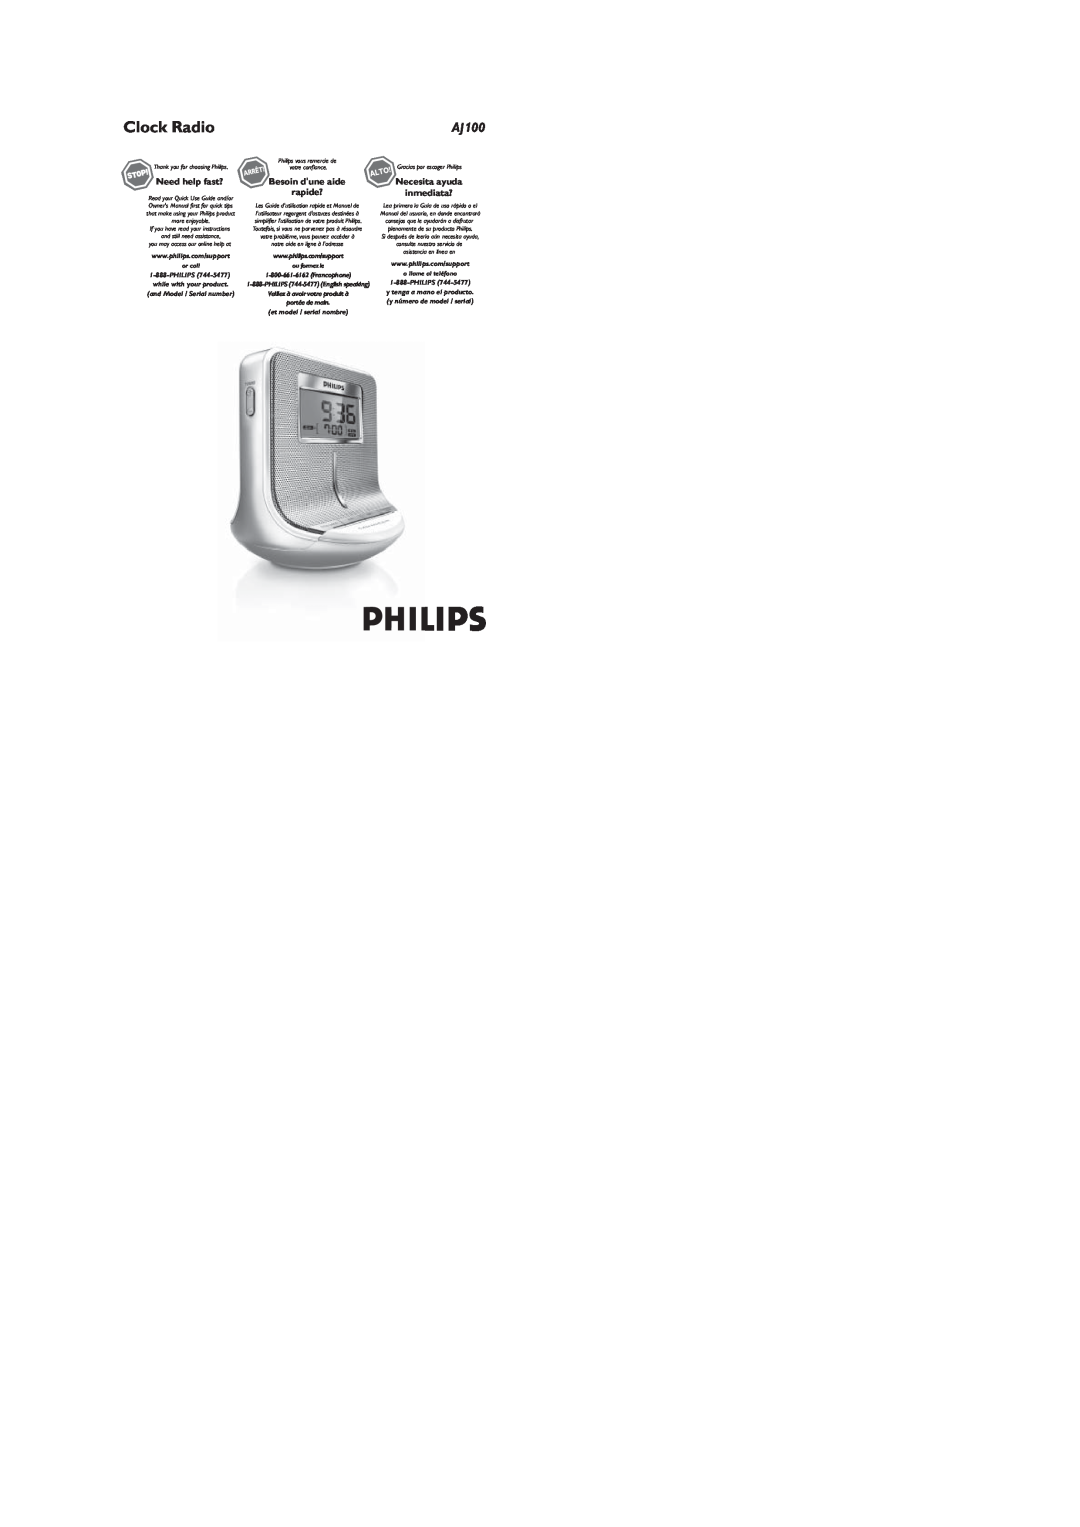 Philips AJ100 owner manual Clock Radio, Necesita ayuda inmediata?, Need help fast?, Besoin dune aide, rapide? 